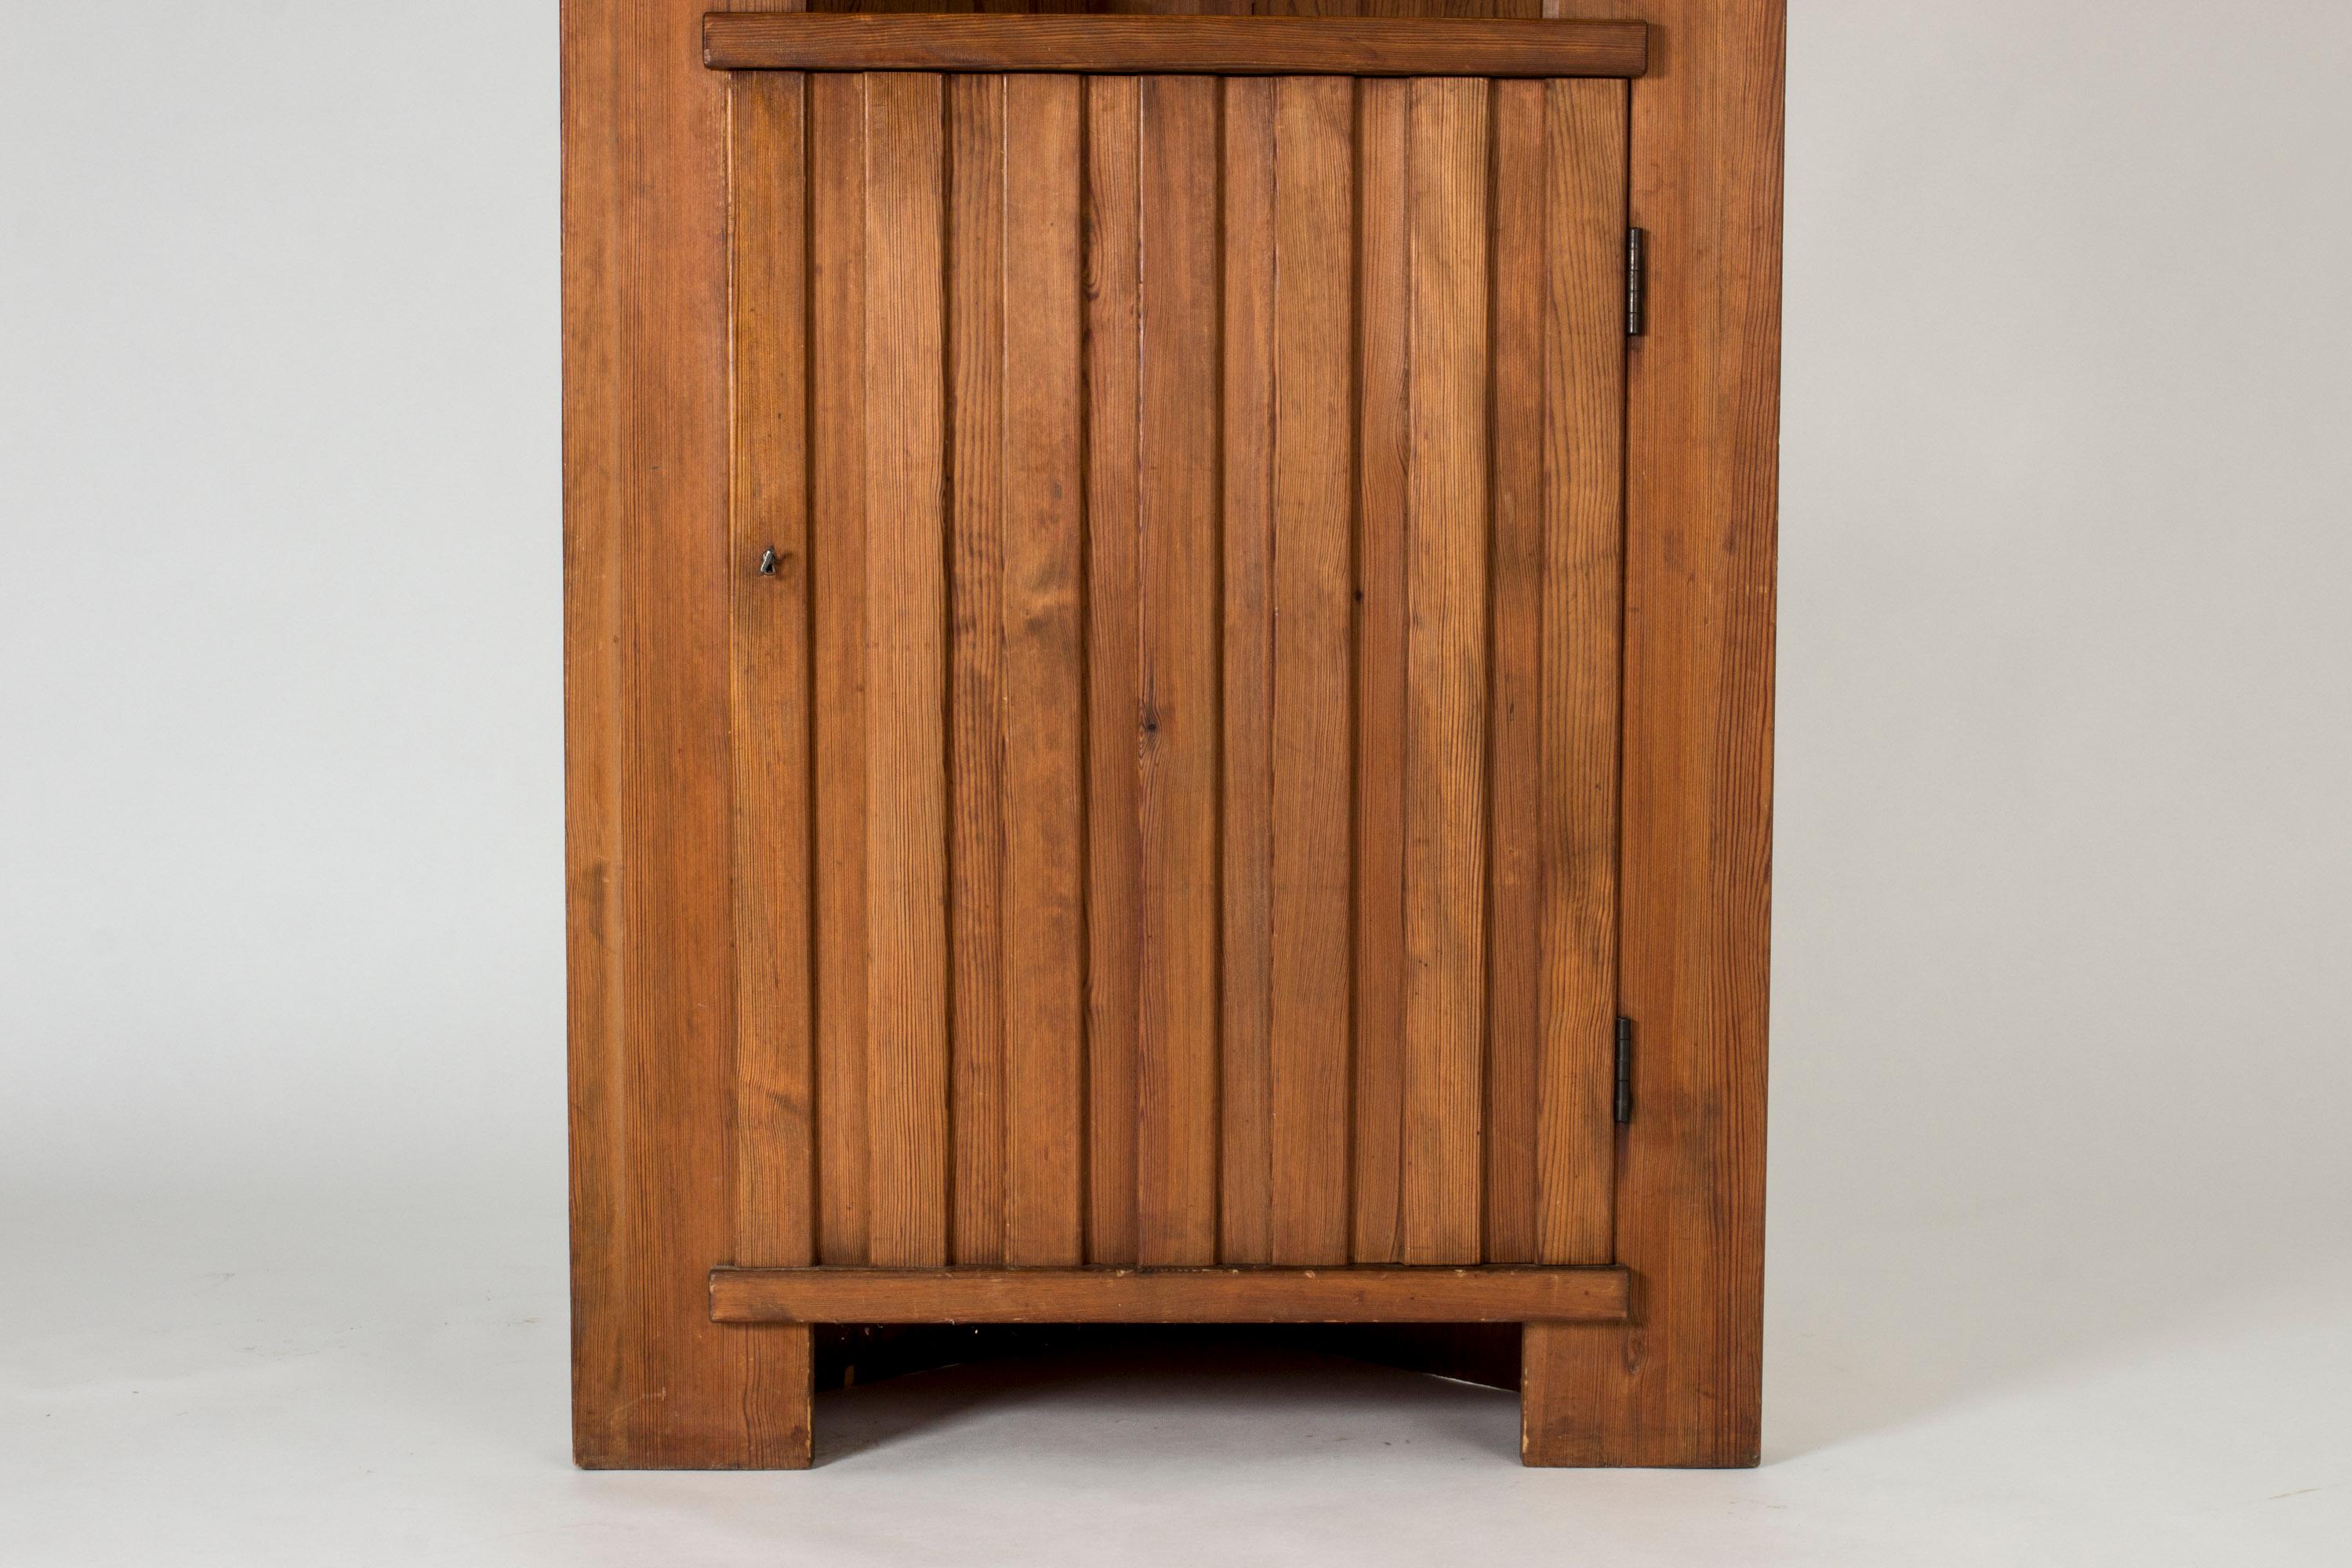 Scandinavian Pine Corner Cabinet, “Utö”, by Axel Einar Hjorth